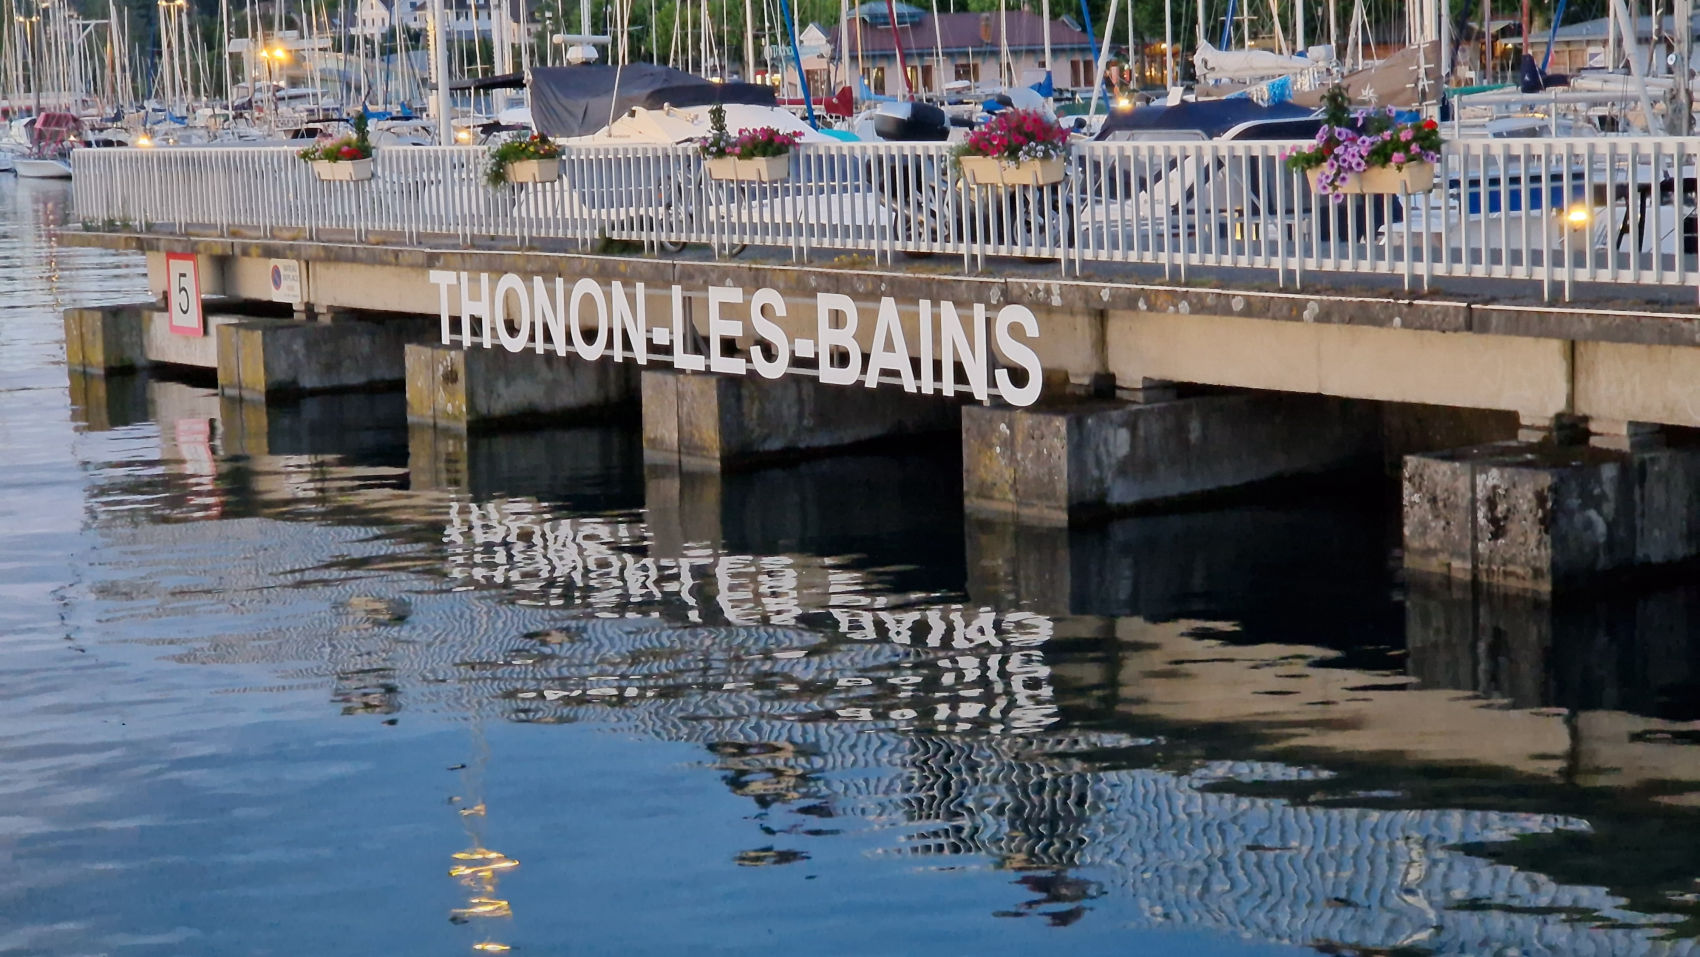 Thonon-Les-Bains